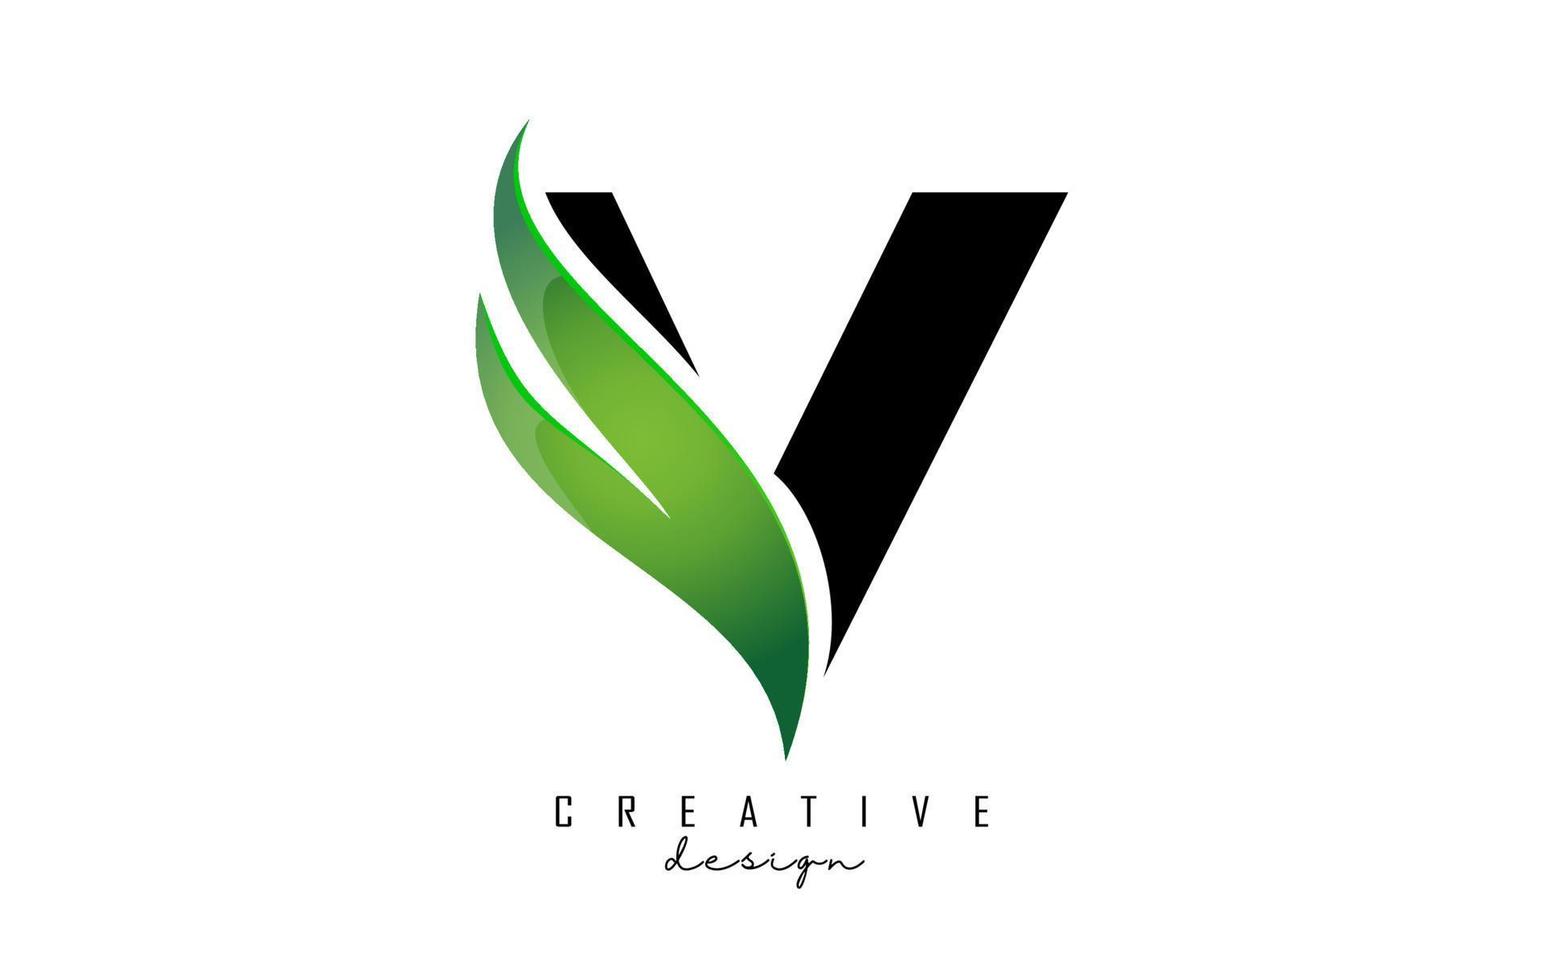 Vector illustration of abstract letter V with green leaf design.